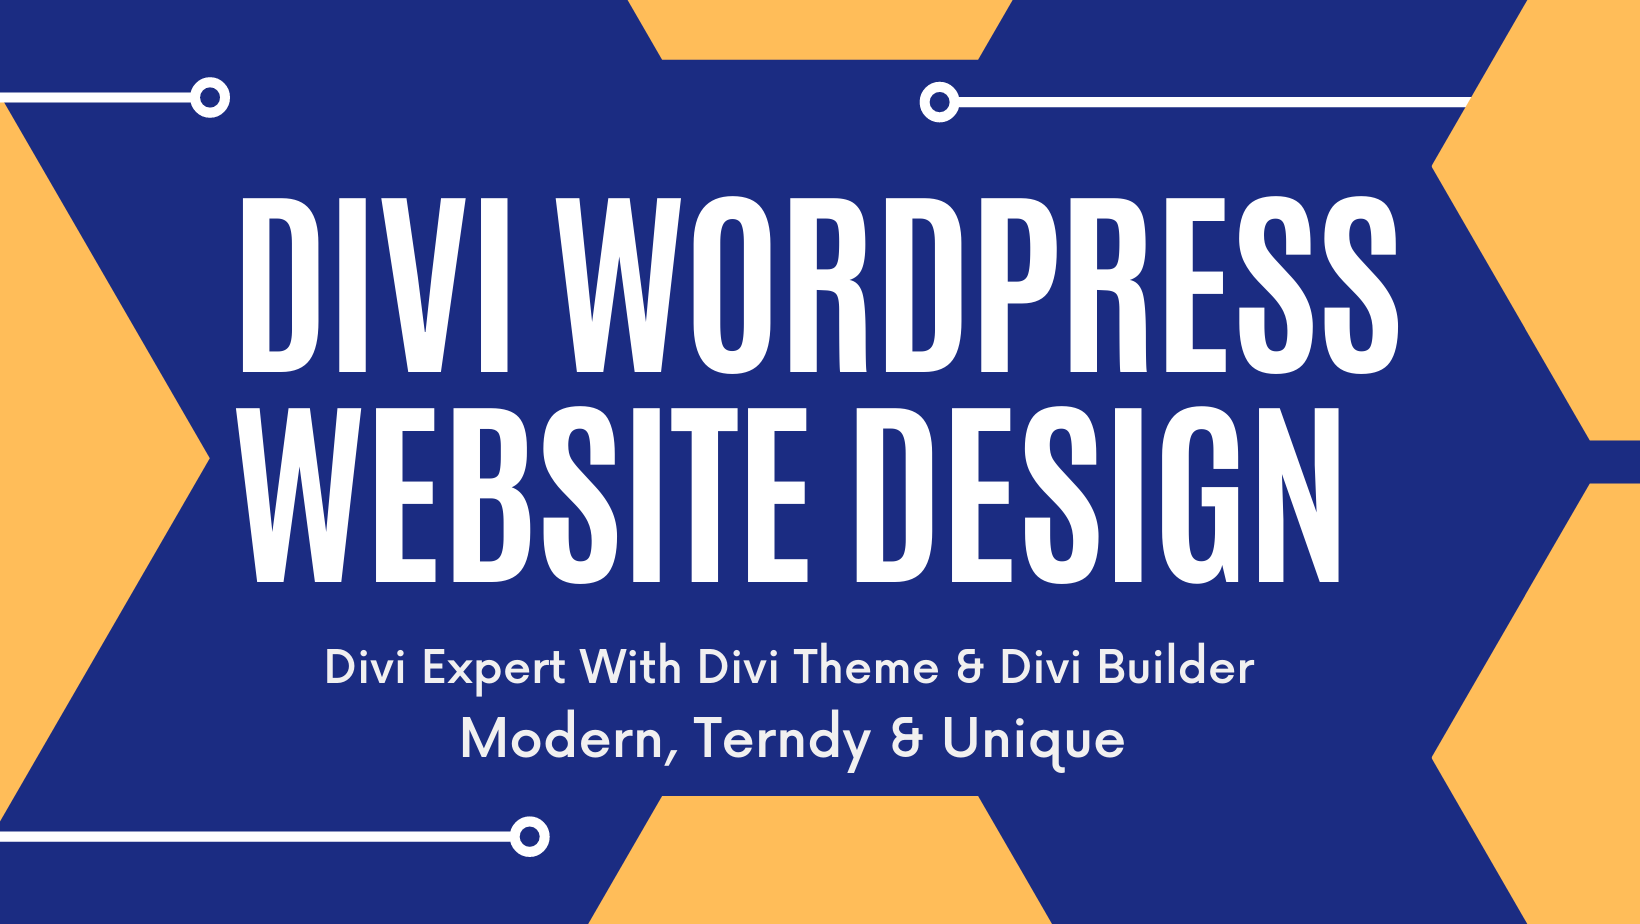 I will be divi expert for divi wordpress website,divi theme customization, divi builder